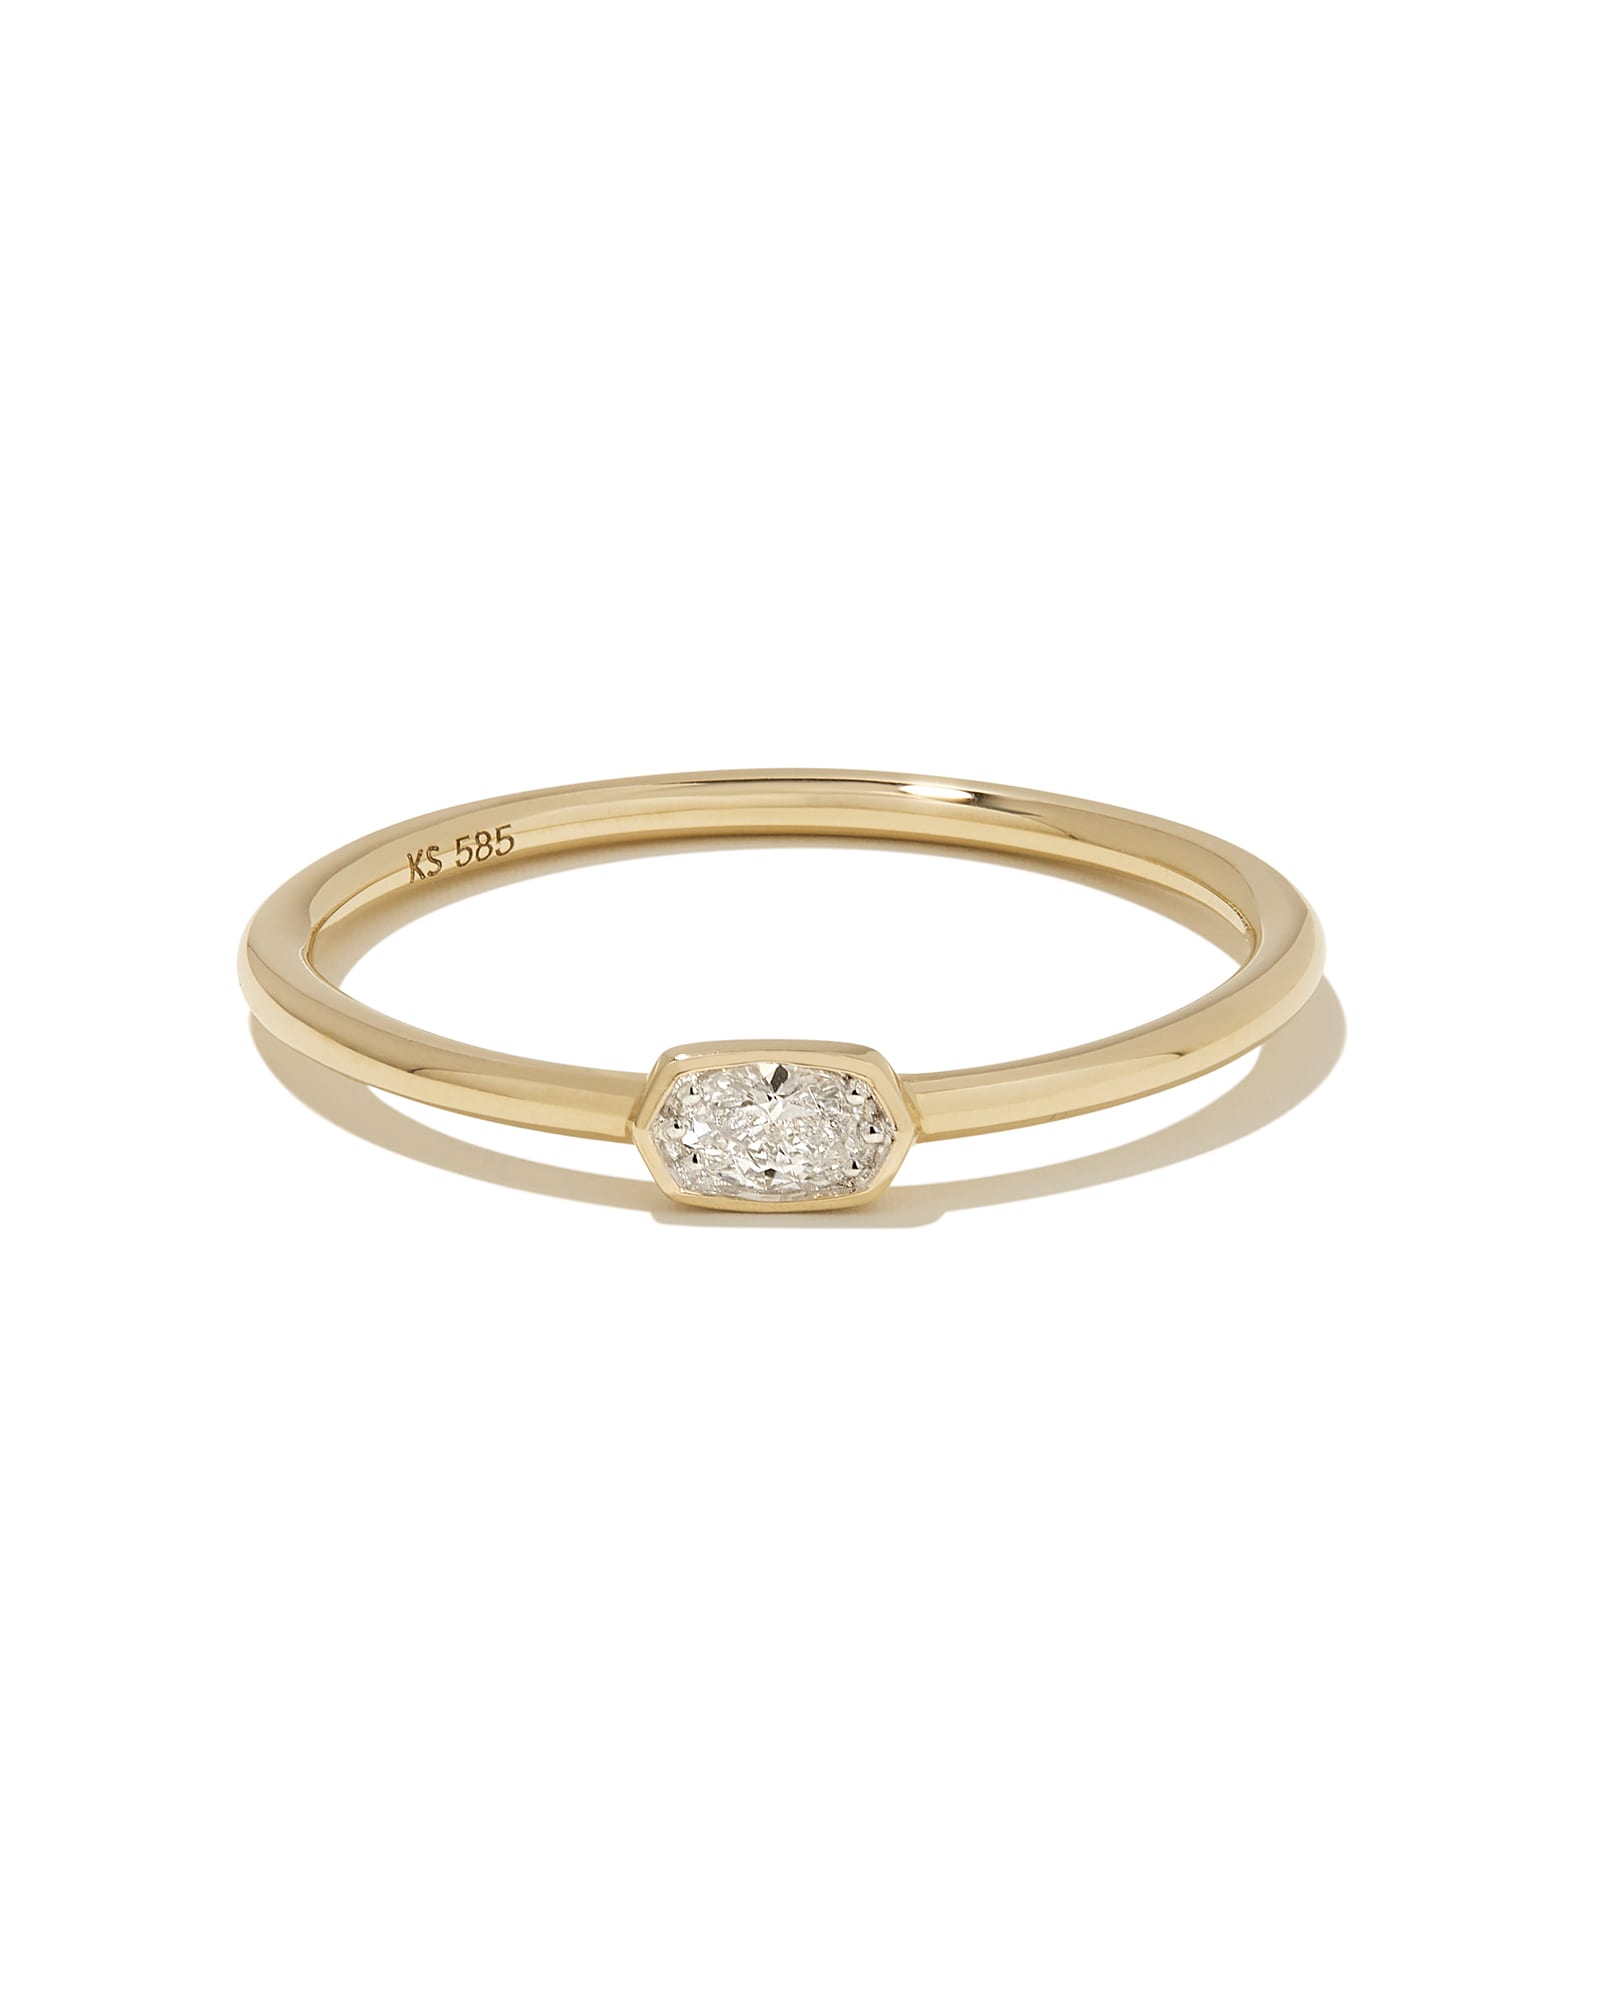 Kendra Scott Marisa 14k Yellow Gold Oval Solitaire Band Ring in White Diamond | Diamonds